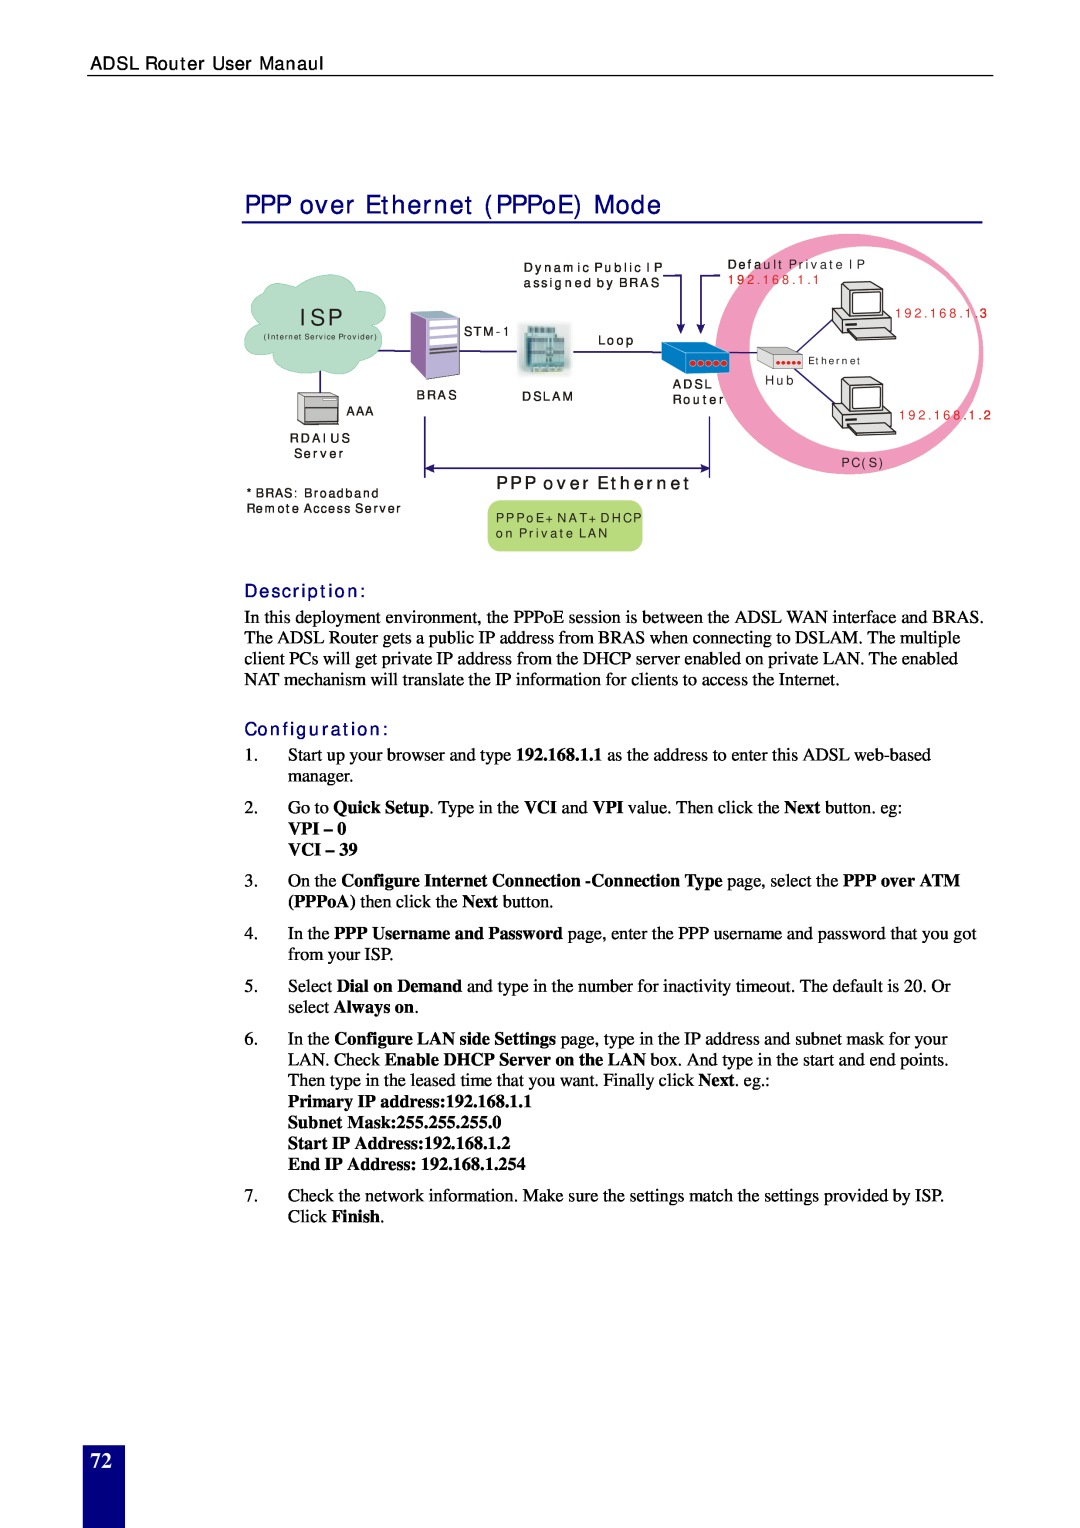 Dynalink RTA770W user manual PPP over Ethernet PPPoE Mode, Description, Configuration, VPI - 0 VCI 